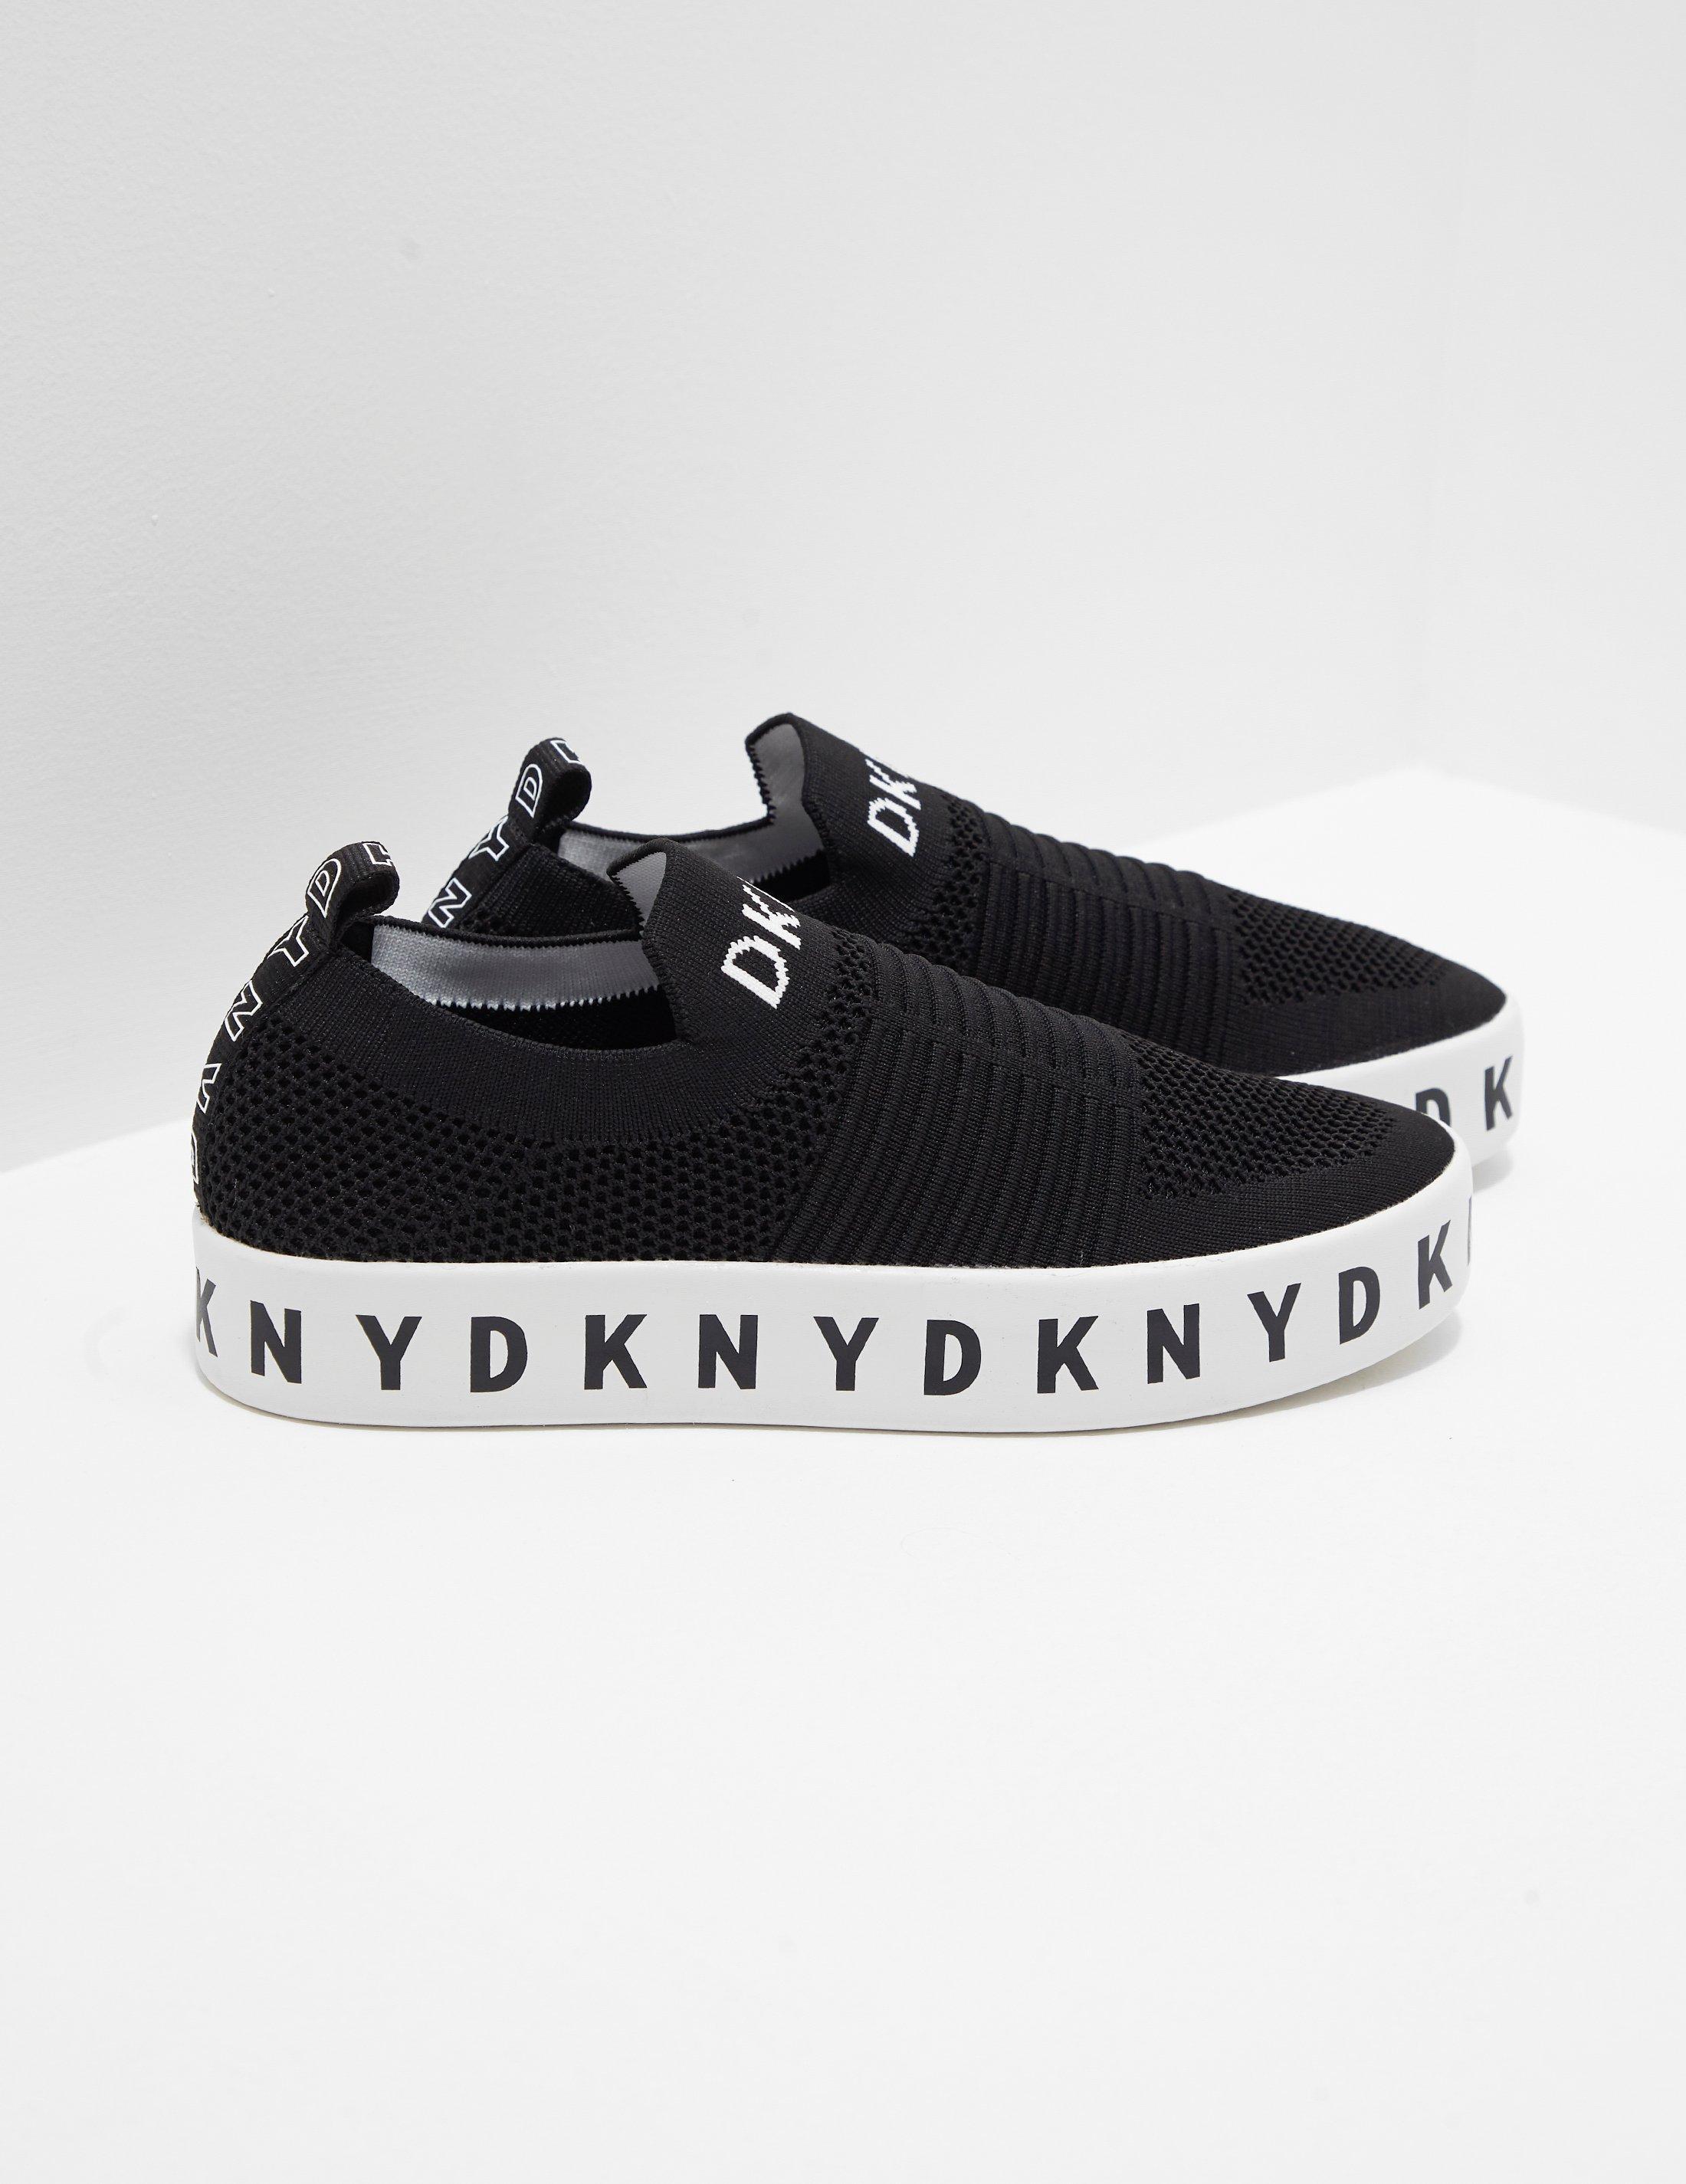 DKNY Rubber Platform Logo Slip On Trainer in Black - Lyst